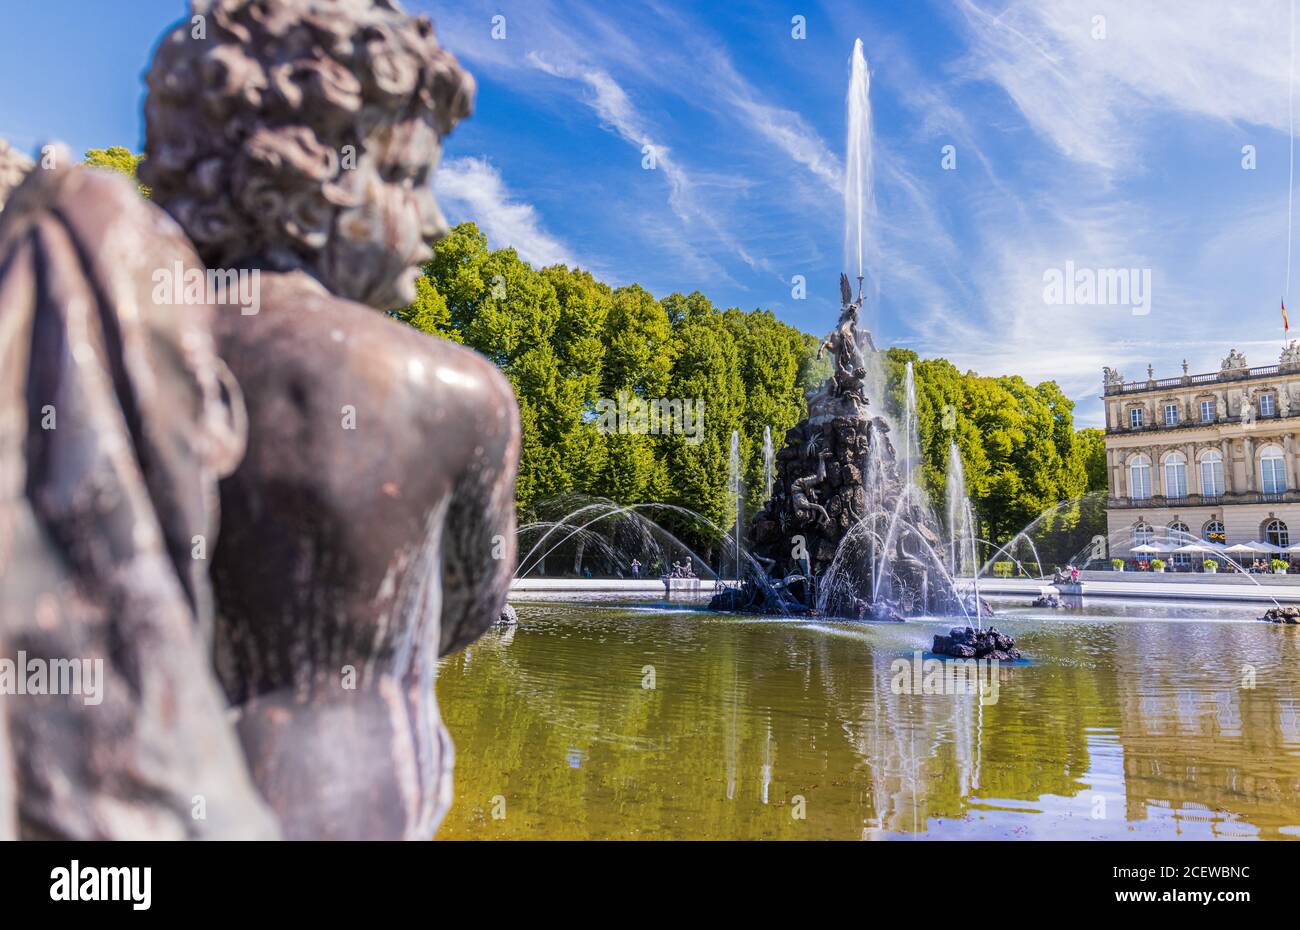 HERRENINSEL, GERMANIA - 31 agosto 2020: Fontana al Palazzo Herrenchiemsee (Palazzo nuovo), che sputa l'acqua ogni 15 minuti Foto Stock